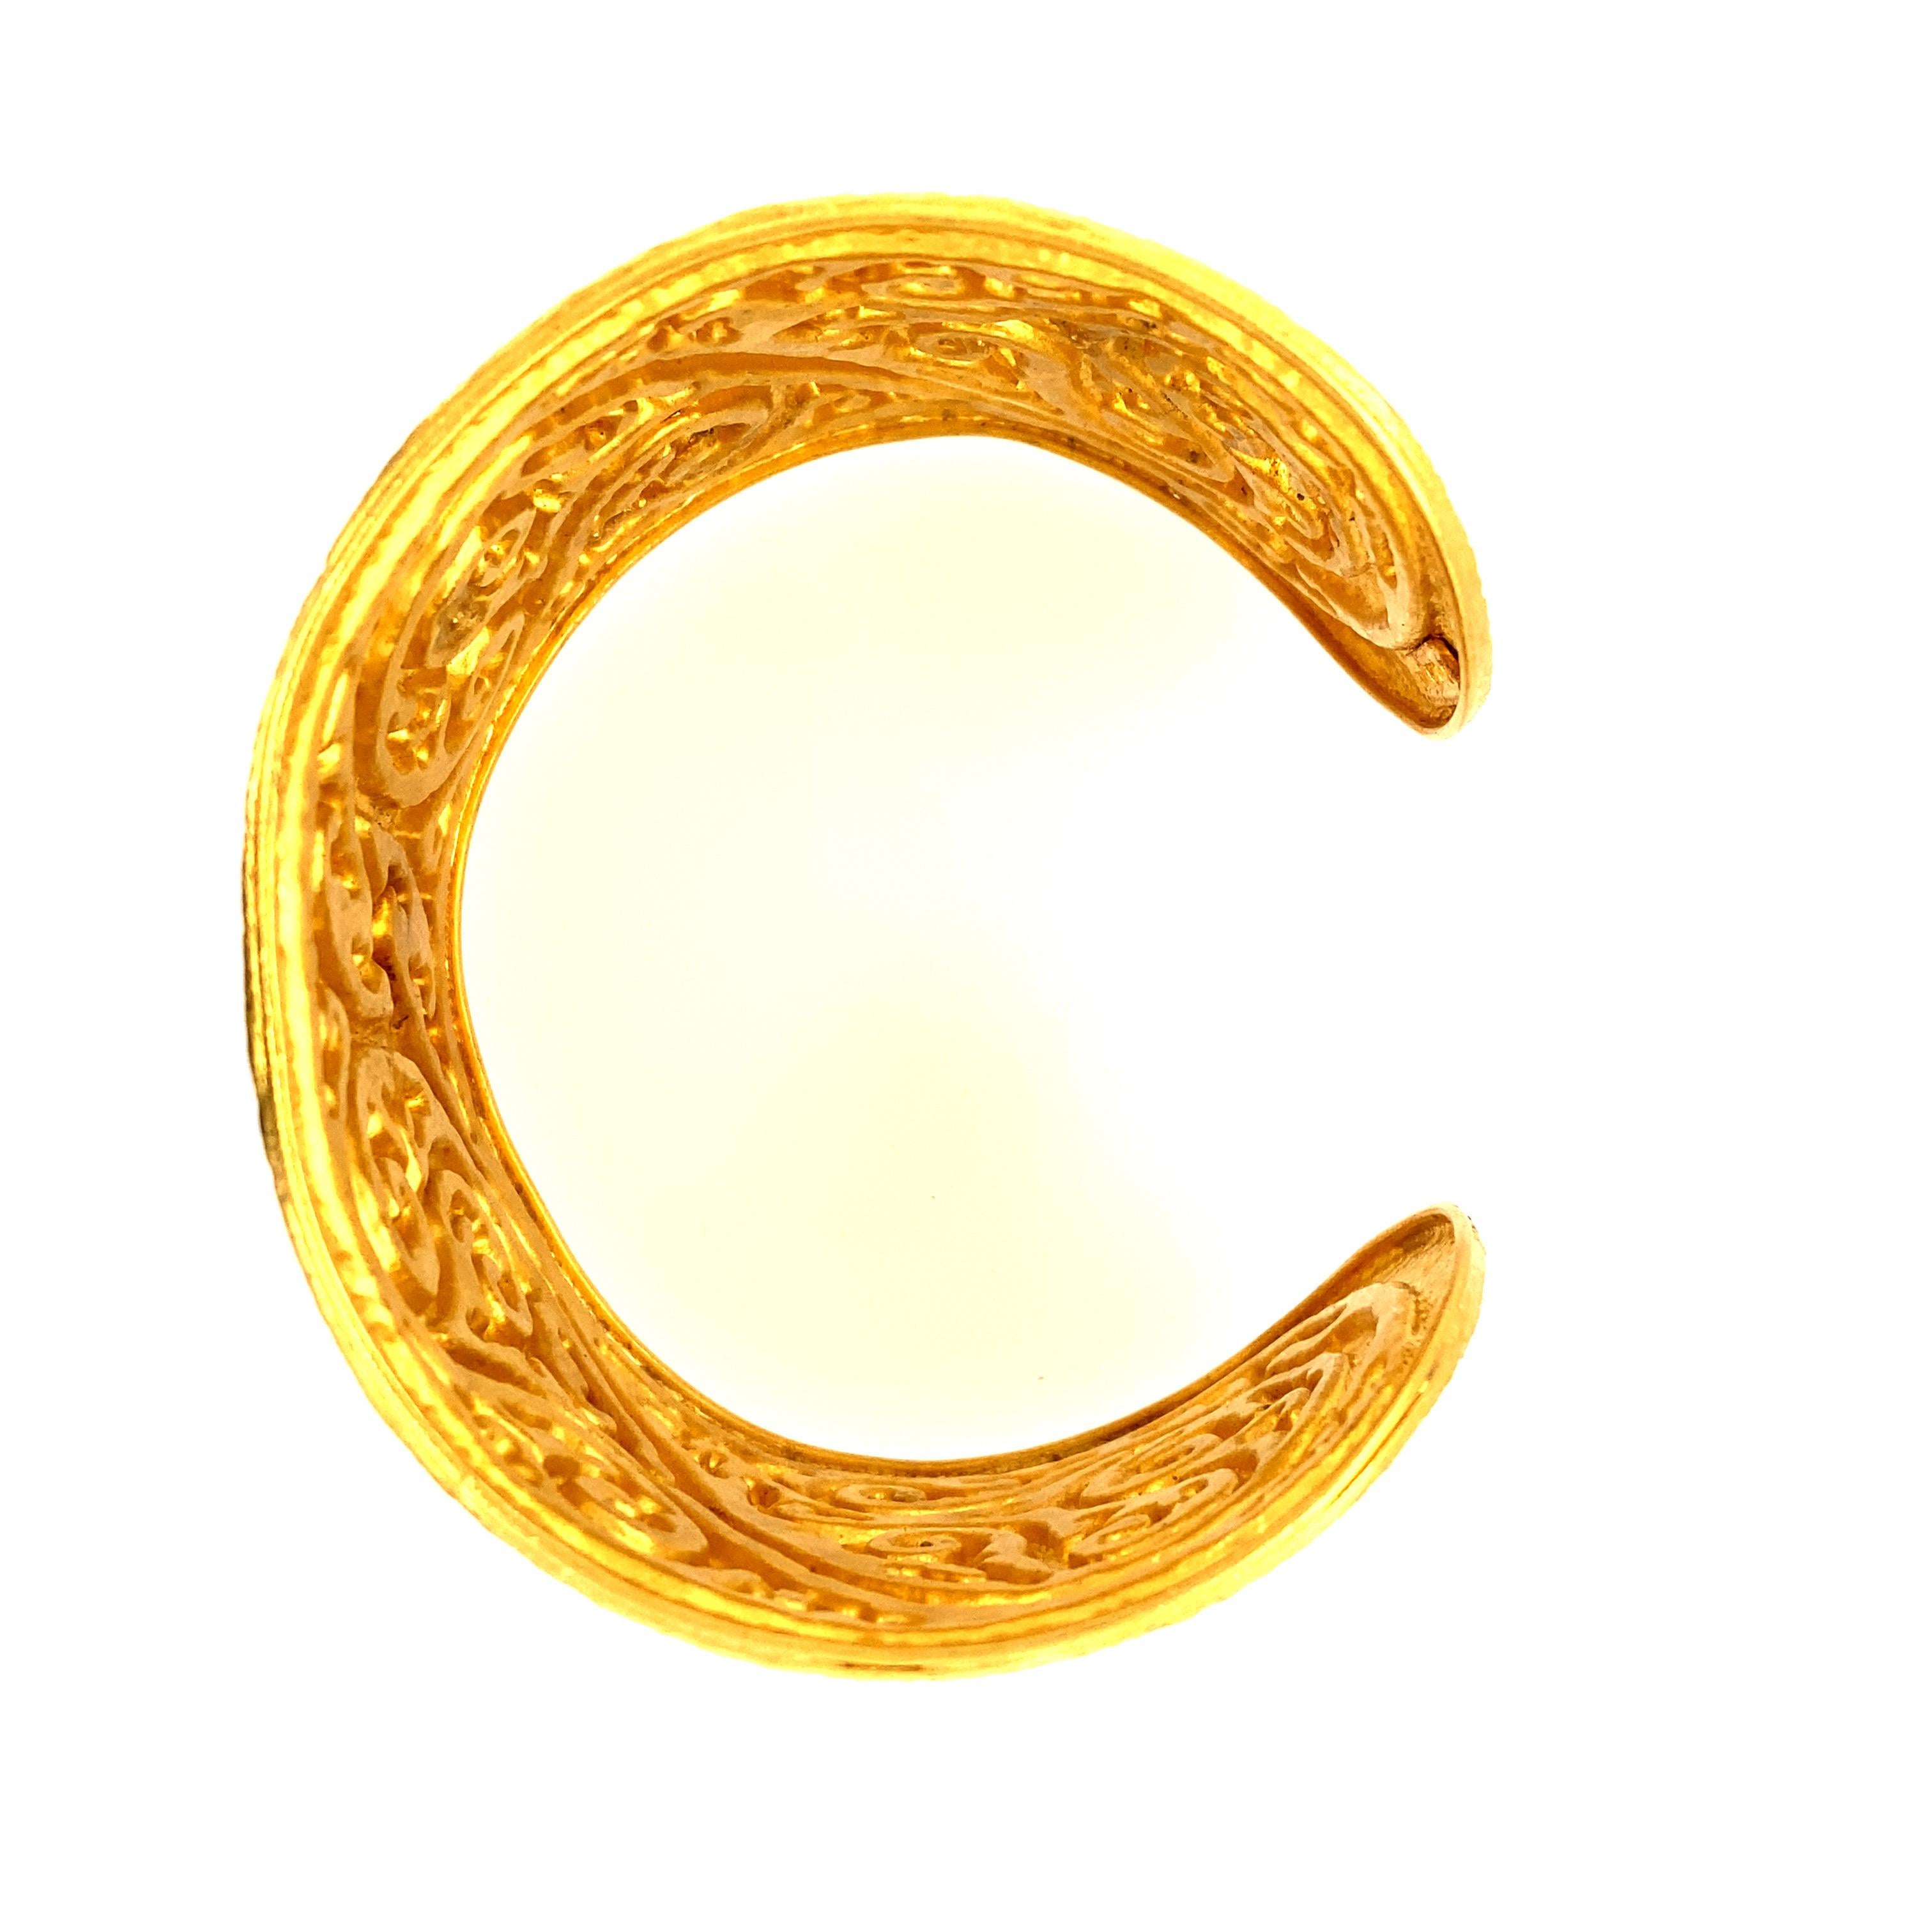 Iilias Lalaounis 22k Gold Cuff Bangle Bracelet 3